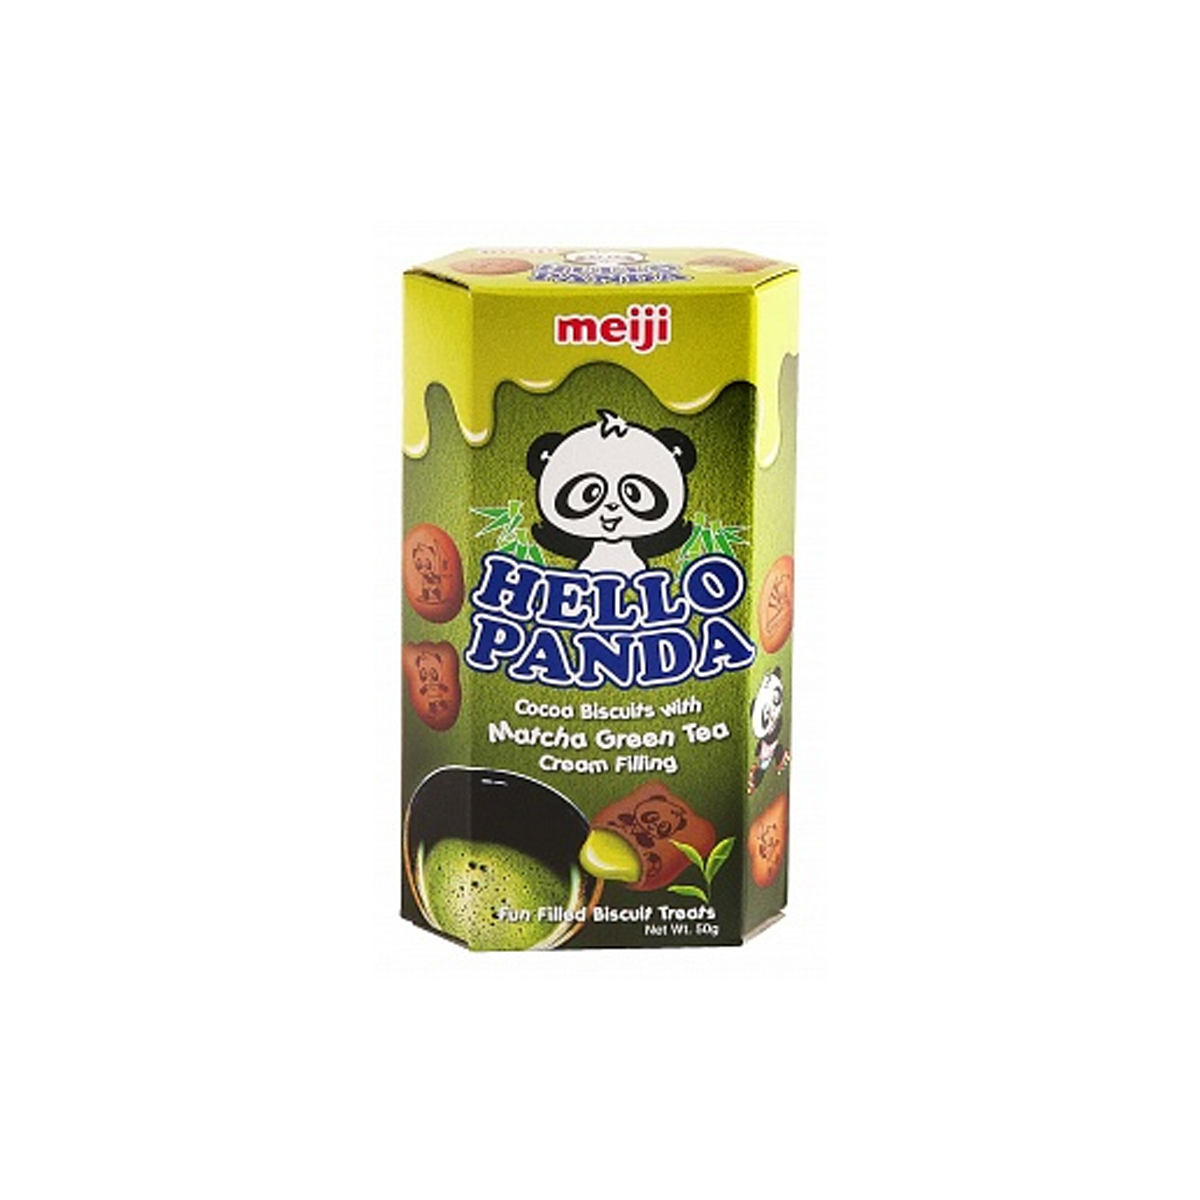 Hello Panda Milk - panda-shaped cookies filled with 50g milk cream